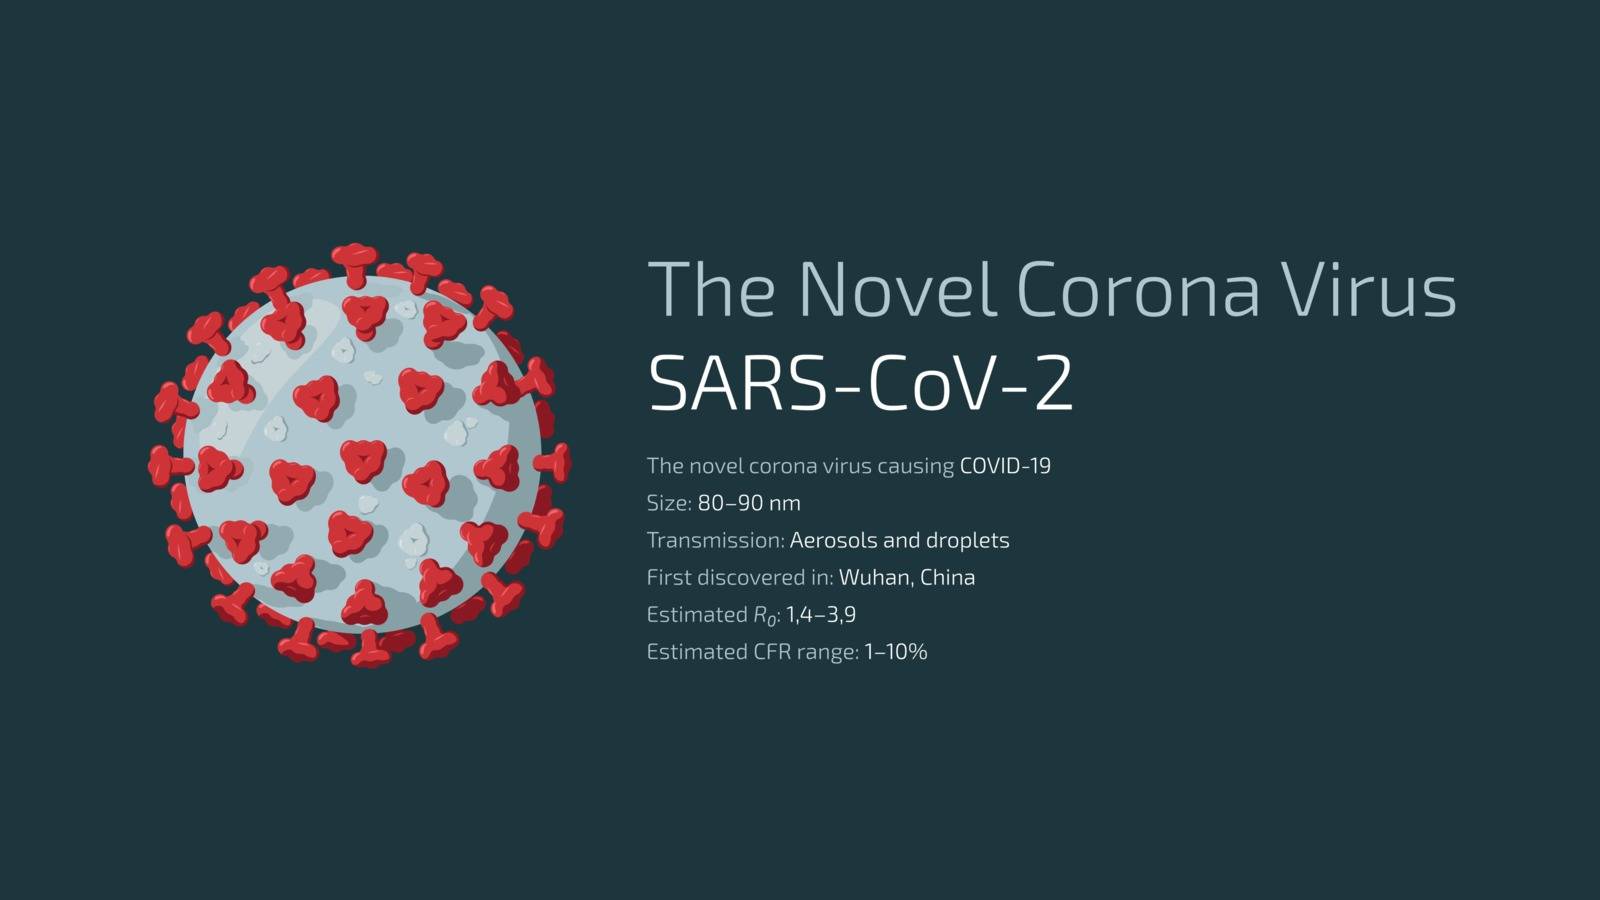 Corona virus, COVID-19, SARS-CoV-2 by David_Lugasi